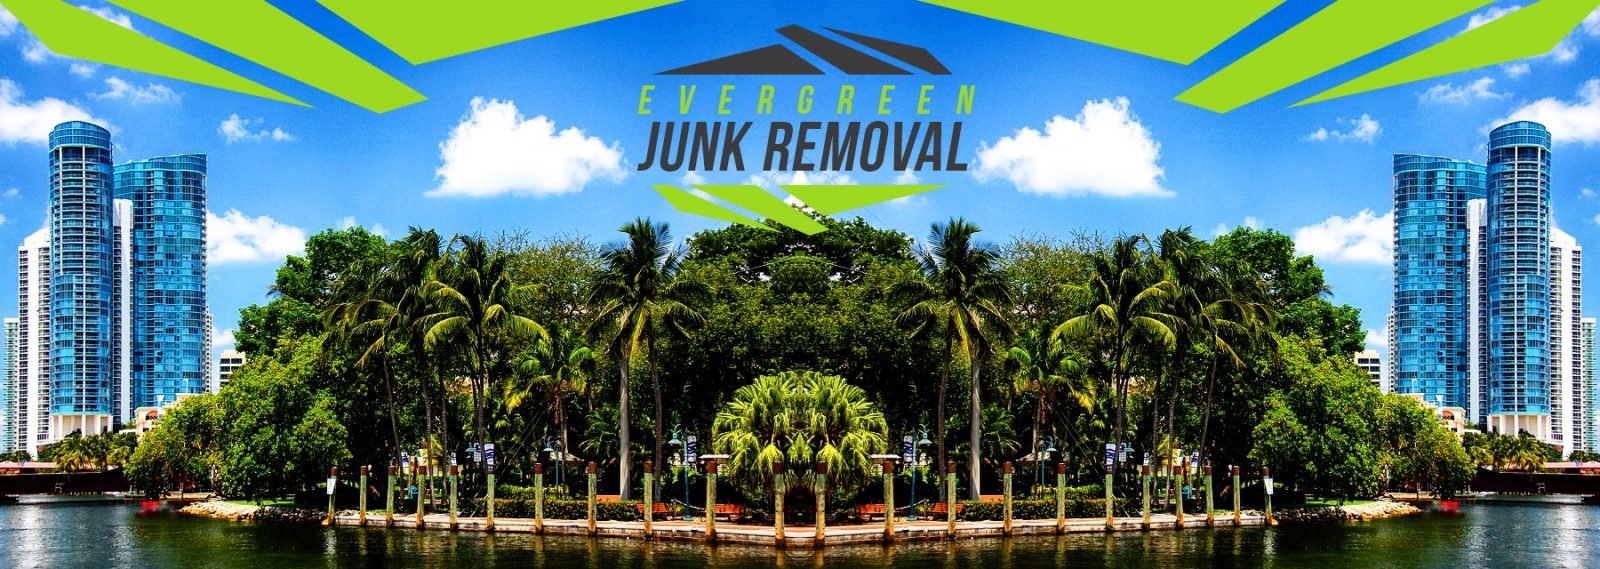 Miami Hot Tub Removal Company